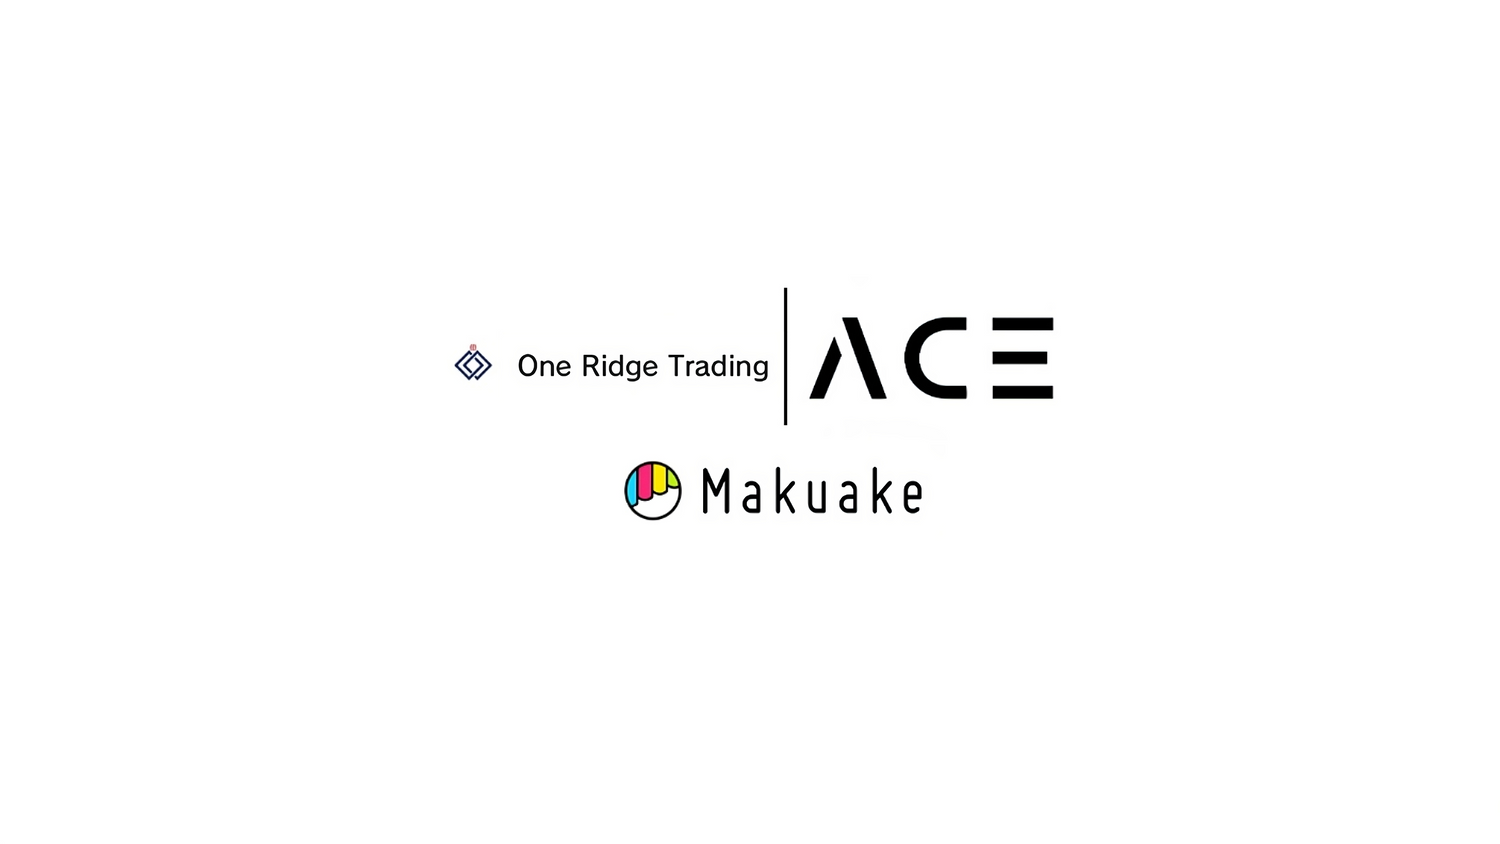 ACE, One Ridge Trading, Makuake